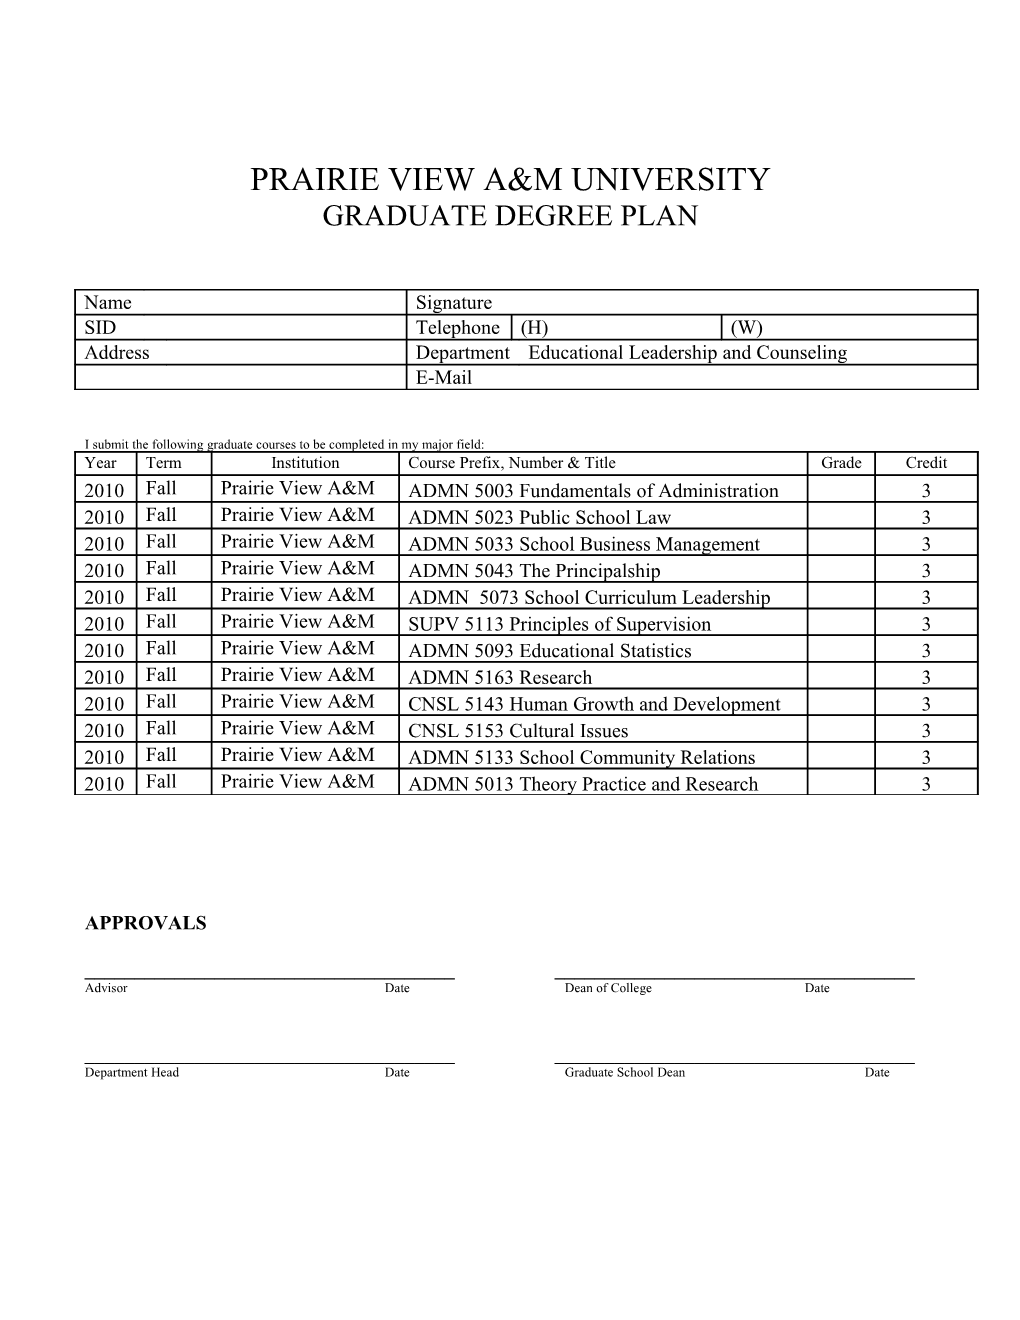 Prairie View A&M University s1